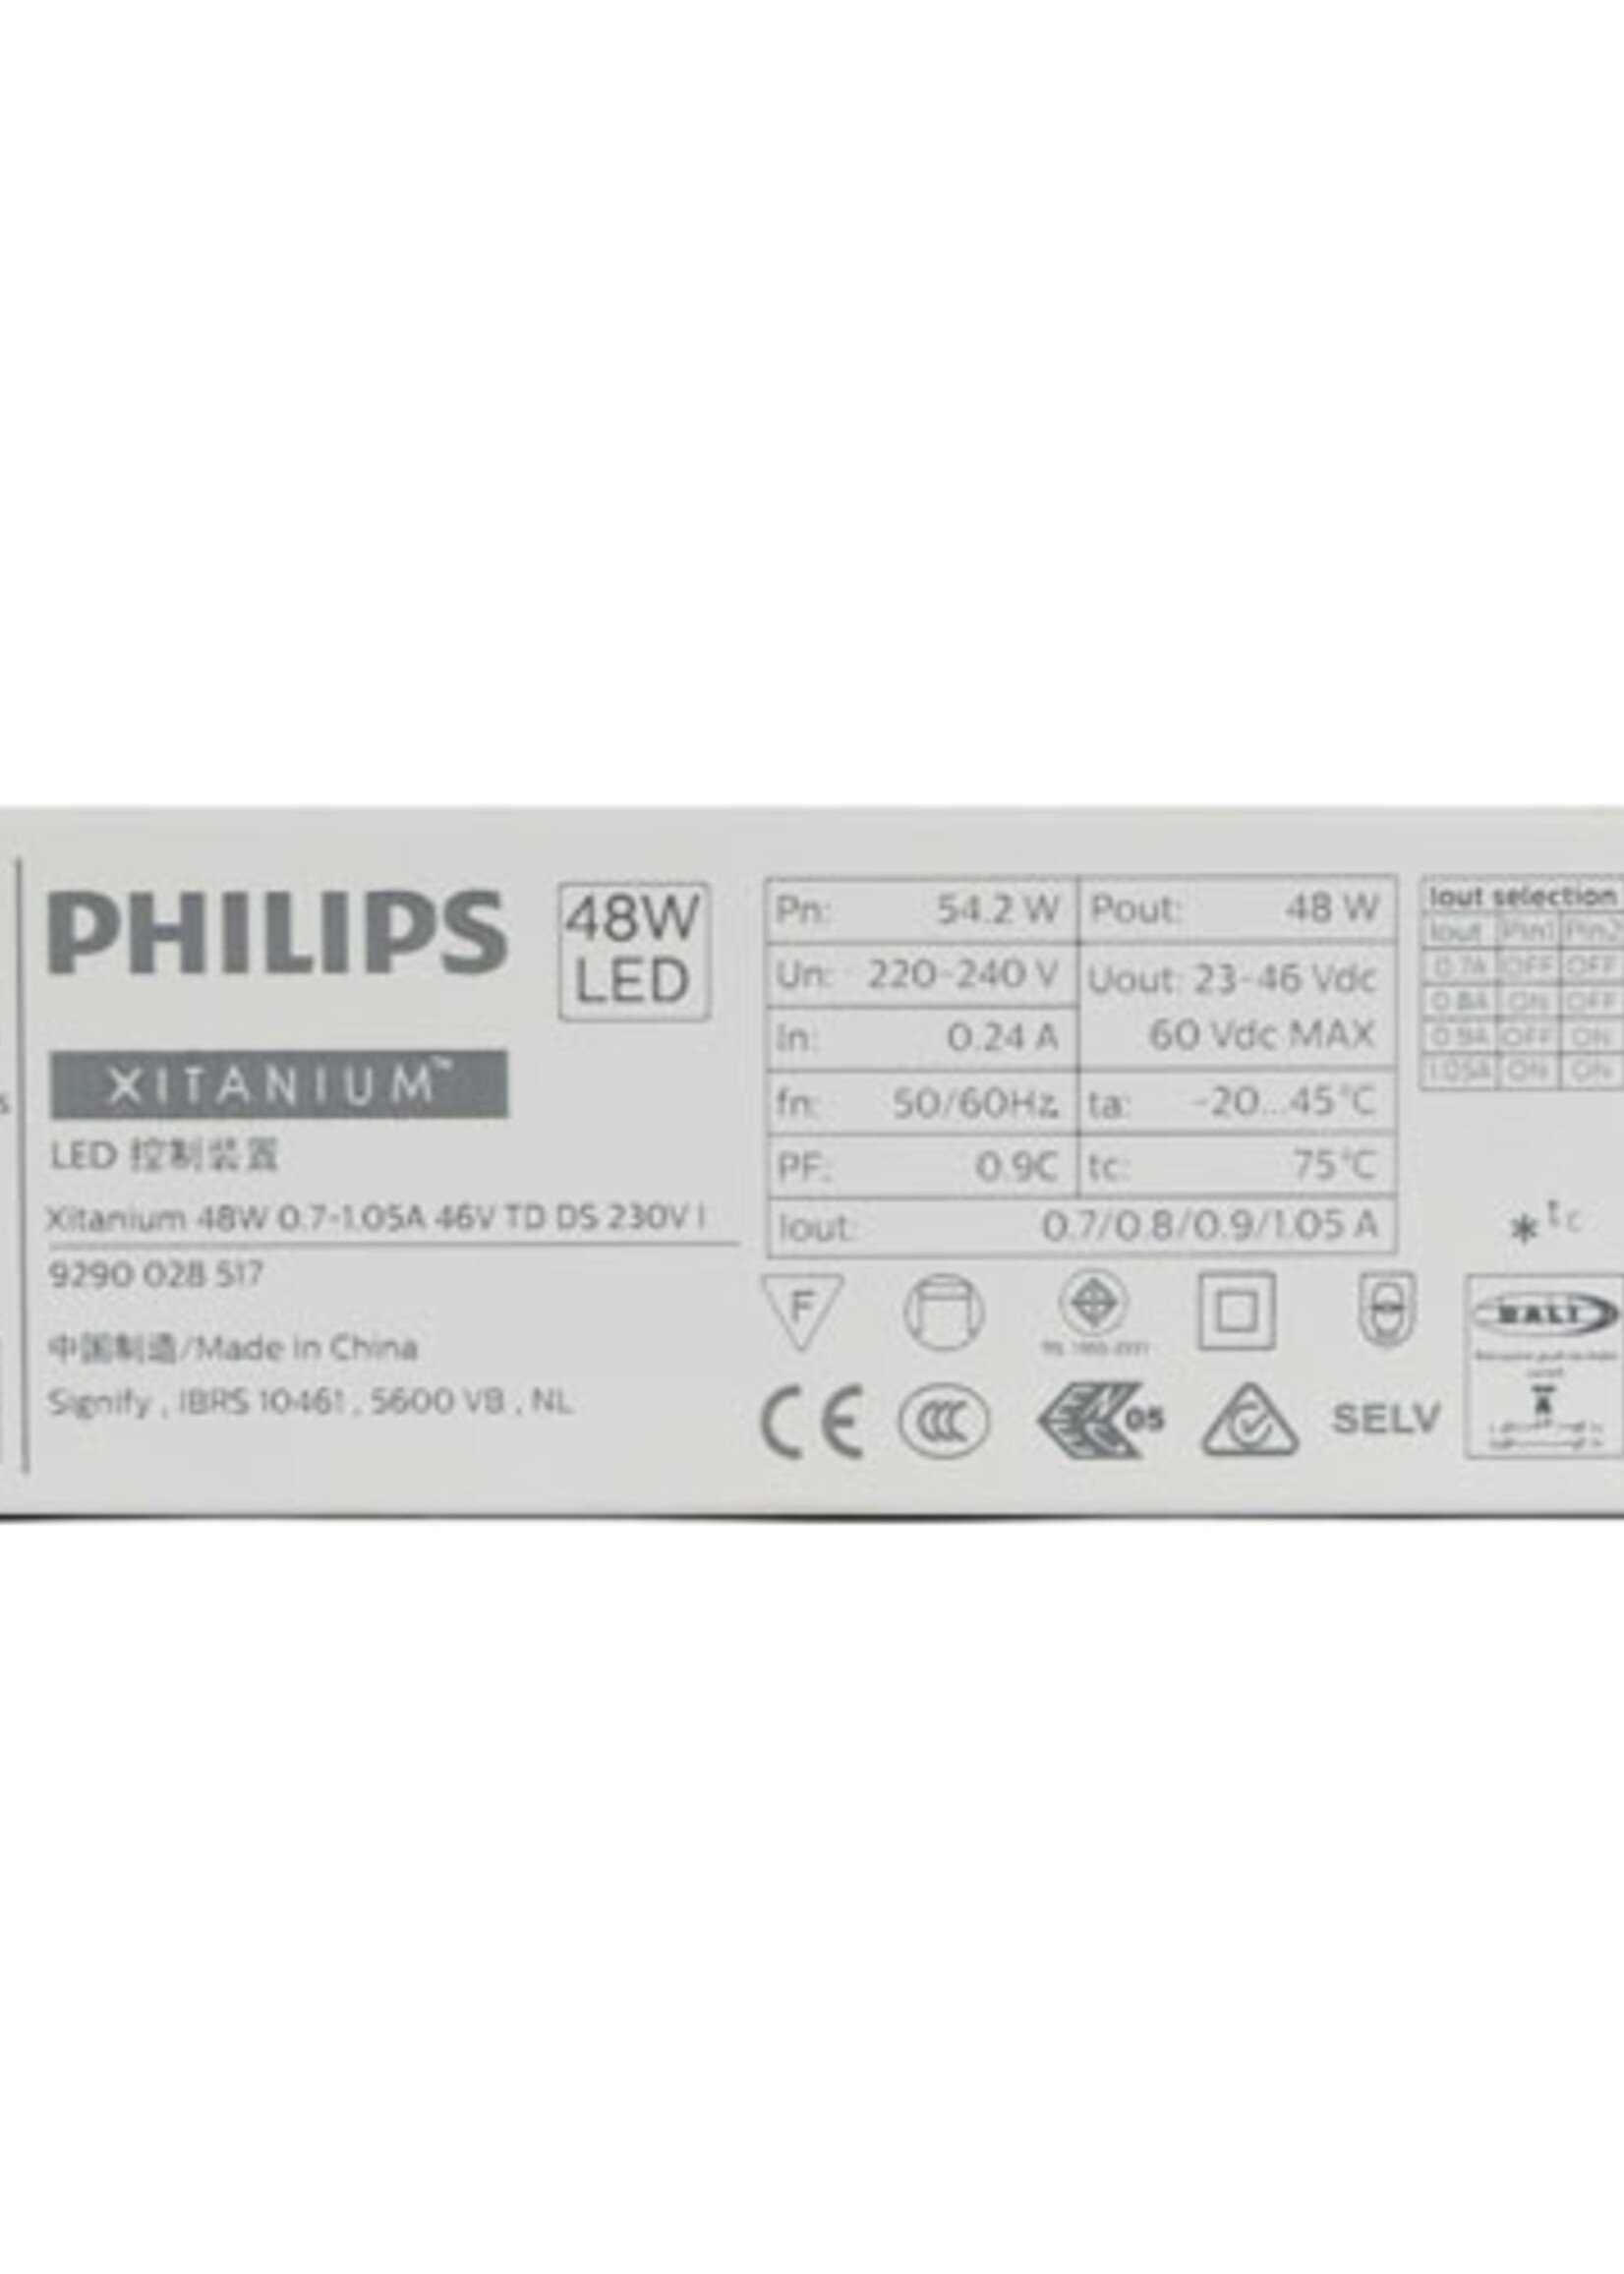 Philips Xitanium LED Driver Philips Xitanium LED Driver 44W Dali dimbaar flikkervrij Wisselende uitgangsstroom: 700mA/800mA/900mA/1050mA